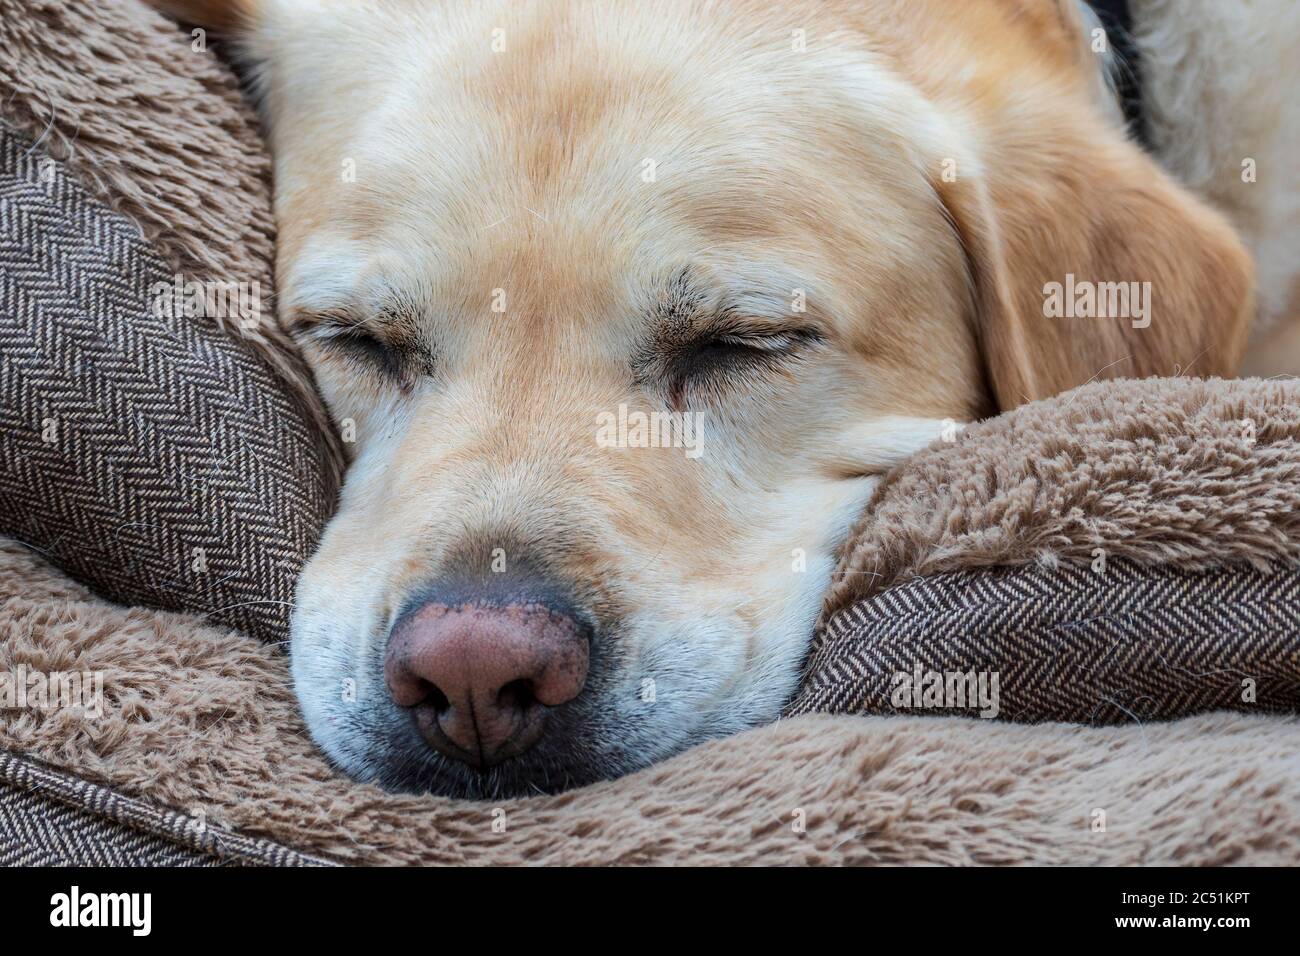 A sleeping labrador dog. Let sleeping dogs lie. Stock Photo